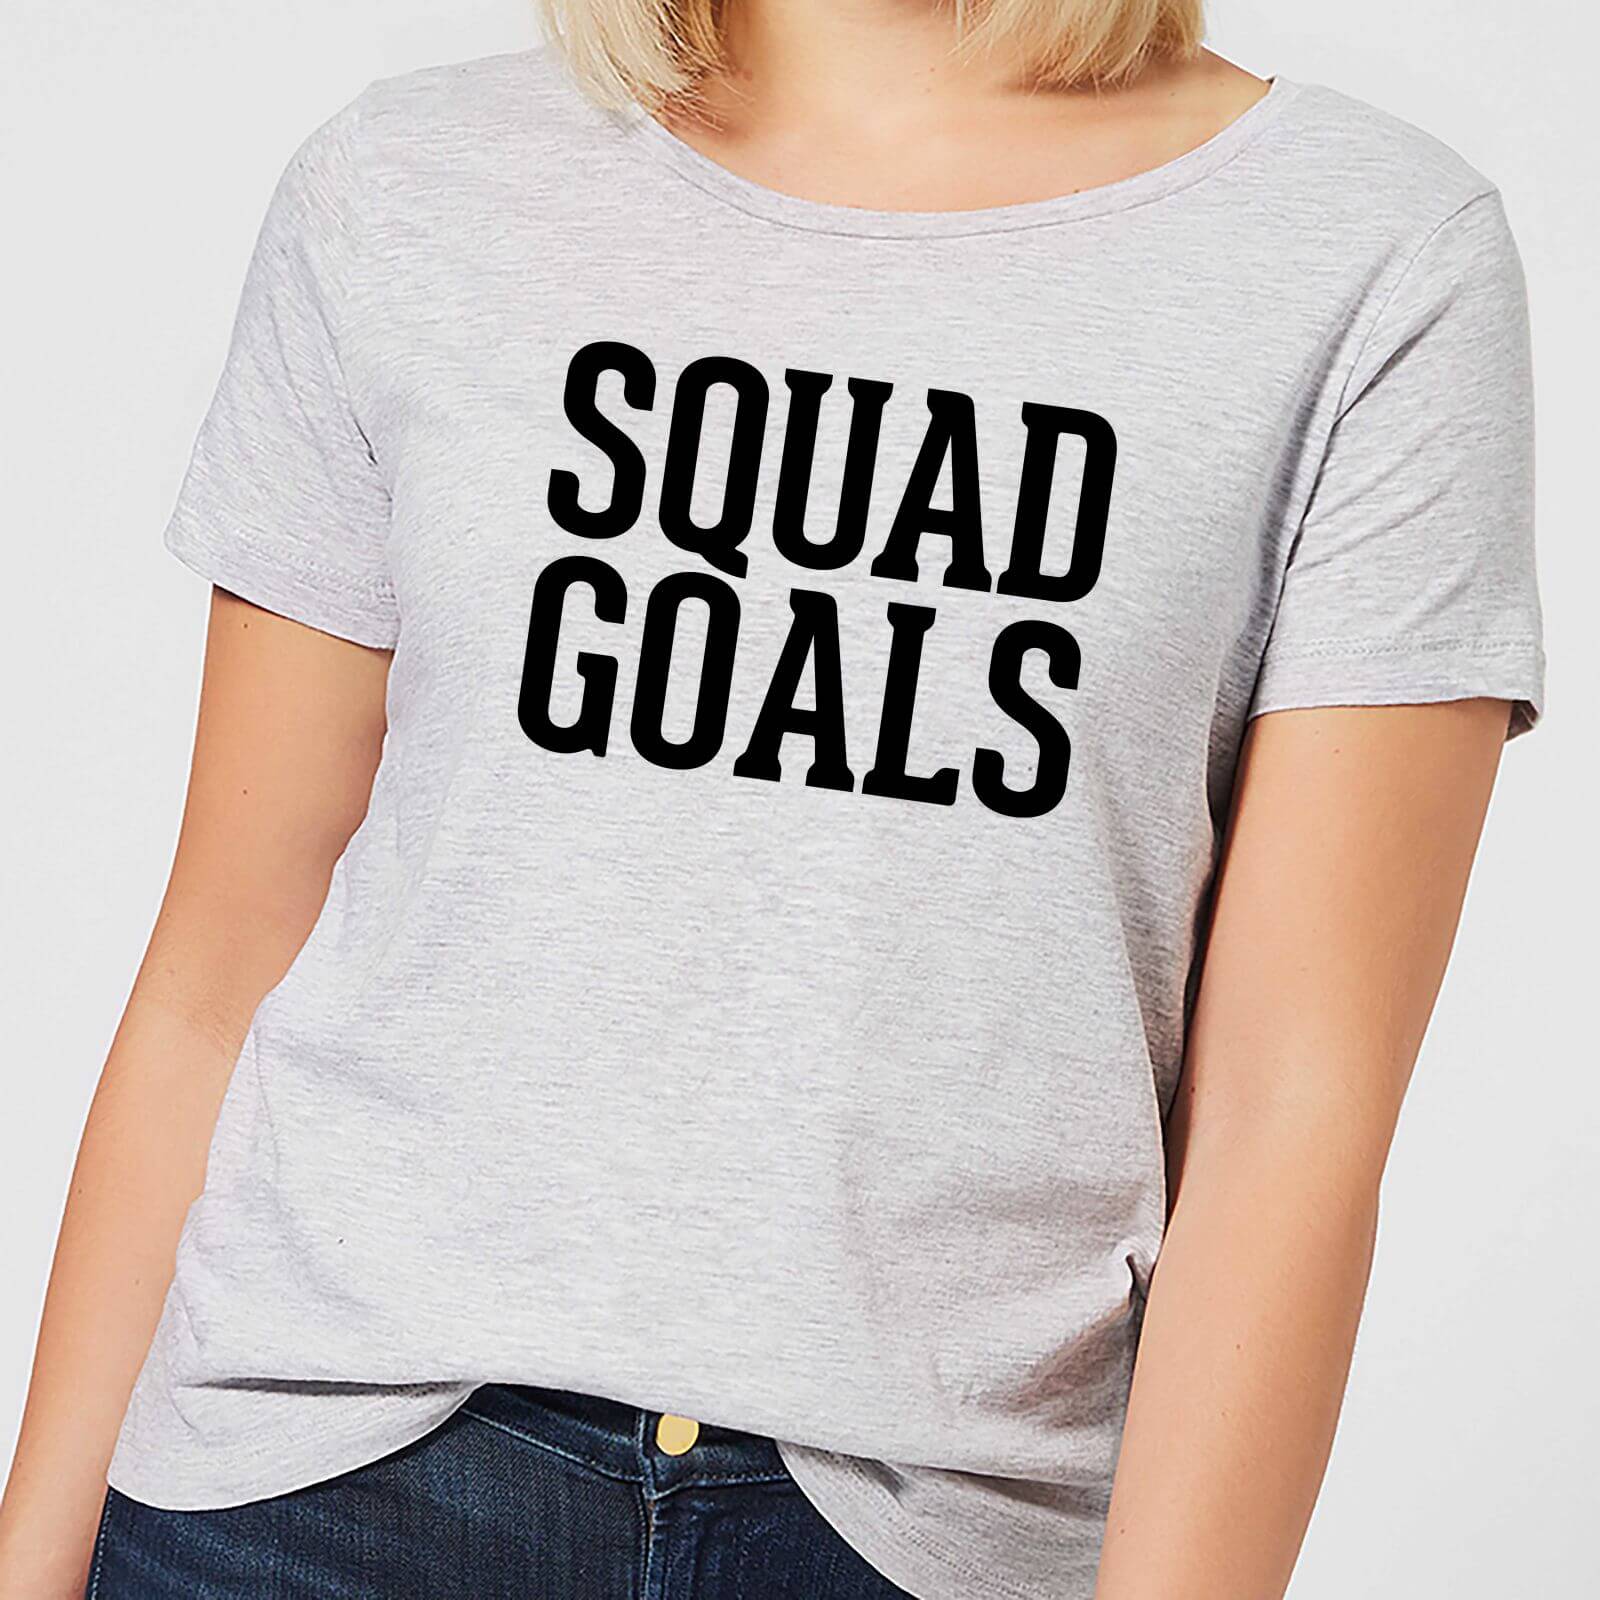 Squad Goals Women's T-Shirt - Grey - M - Grey